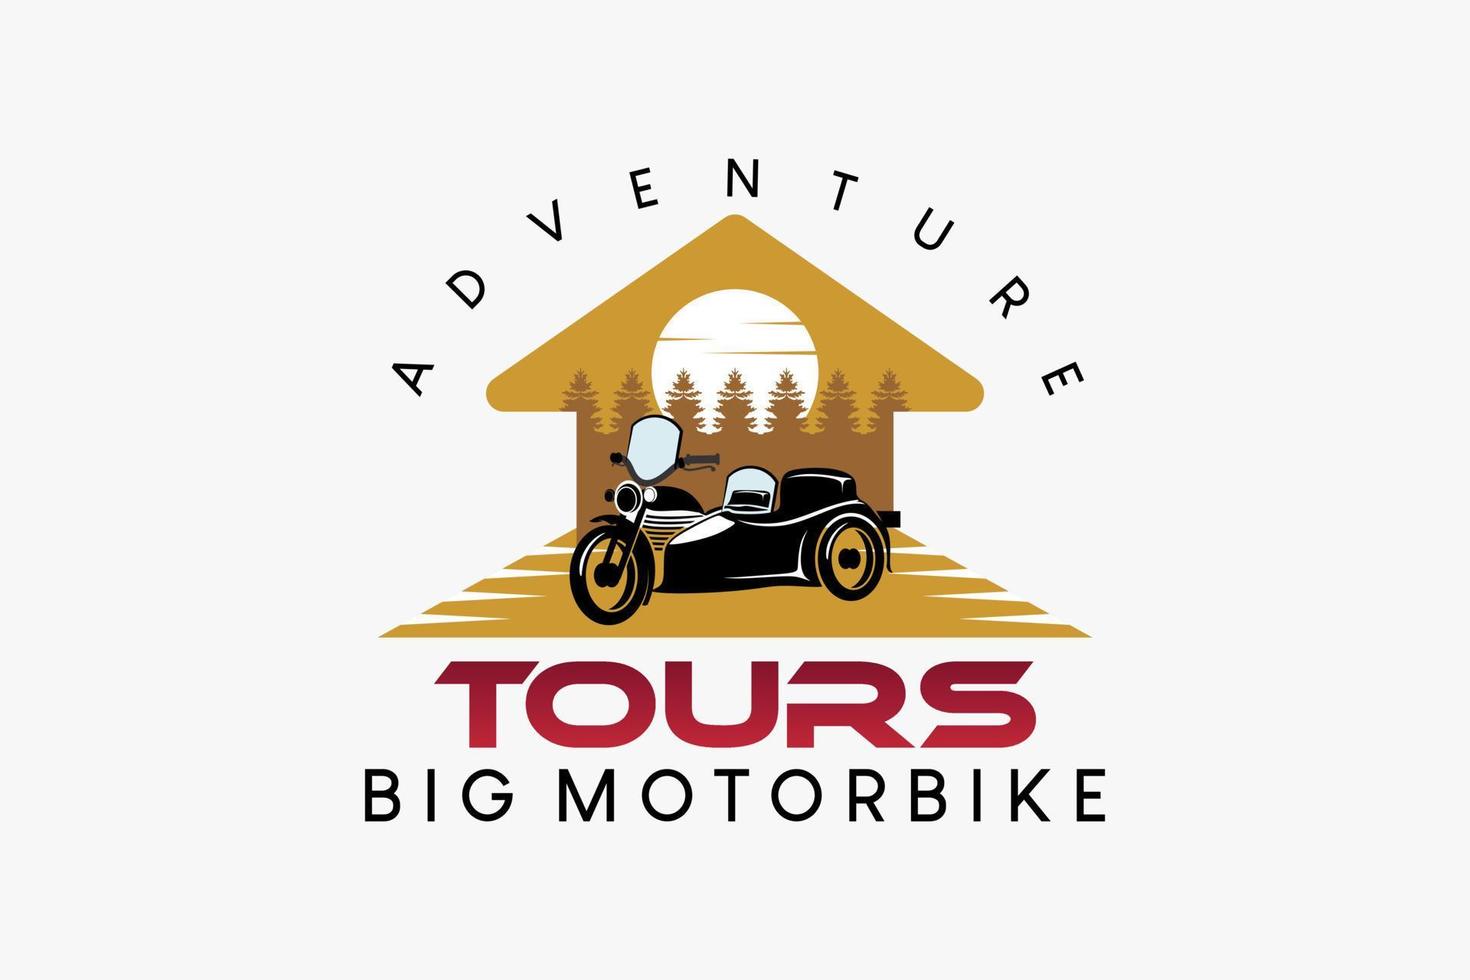 diseño de logotipo de sidecar de motocicleta grande para viajes o aventuras, silueta de motocicleta grande combinada con la naturaleza en un ícono doméstico vector